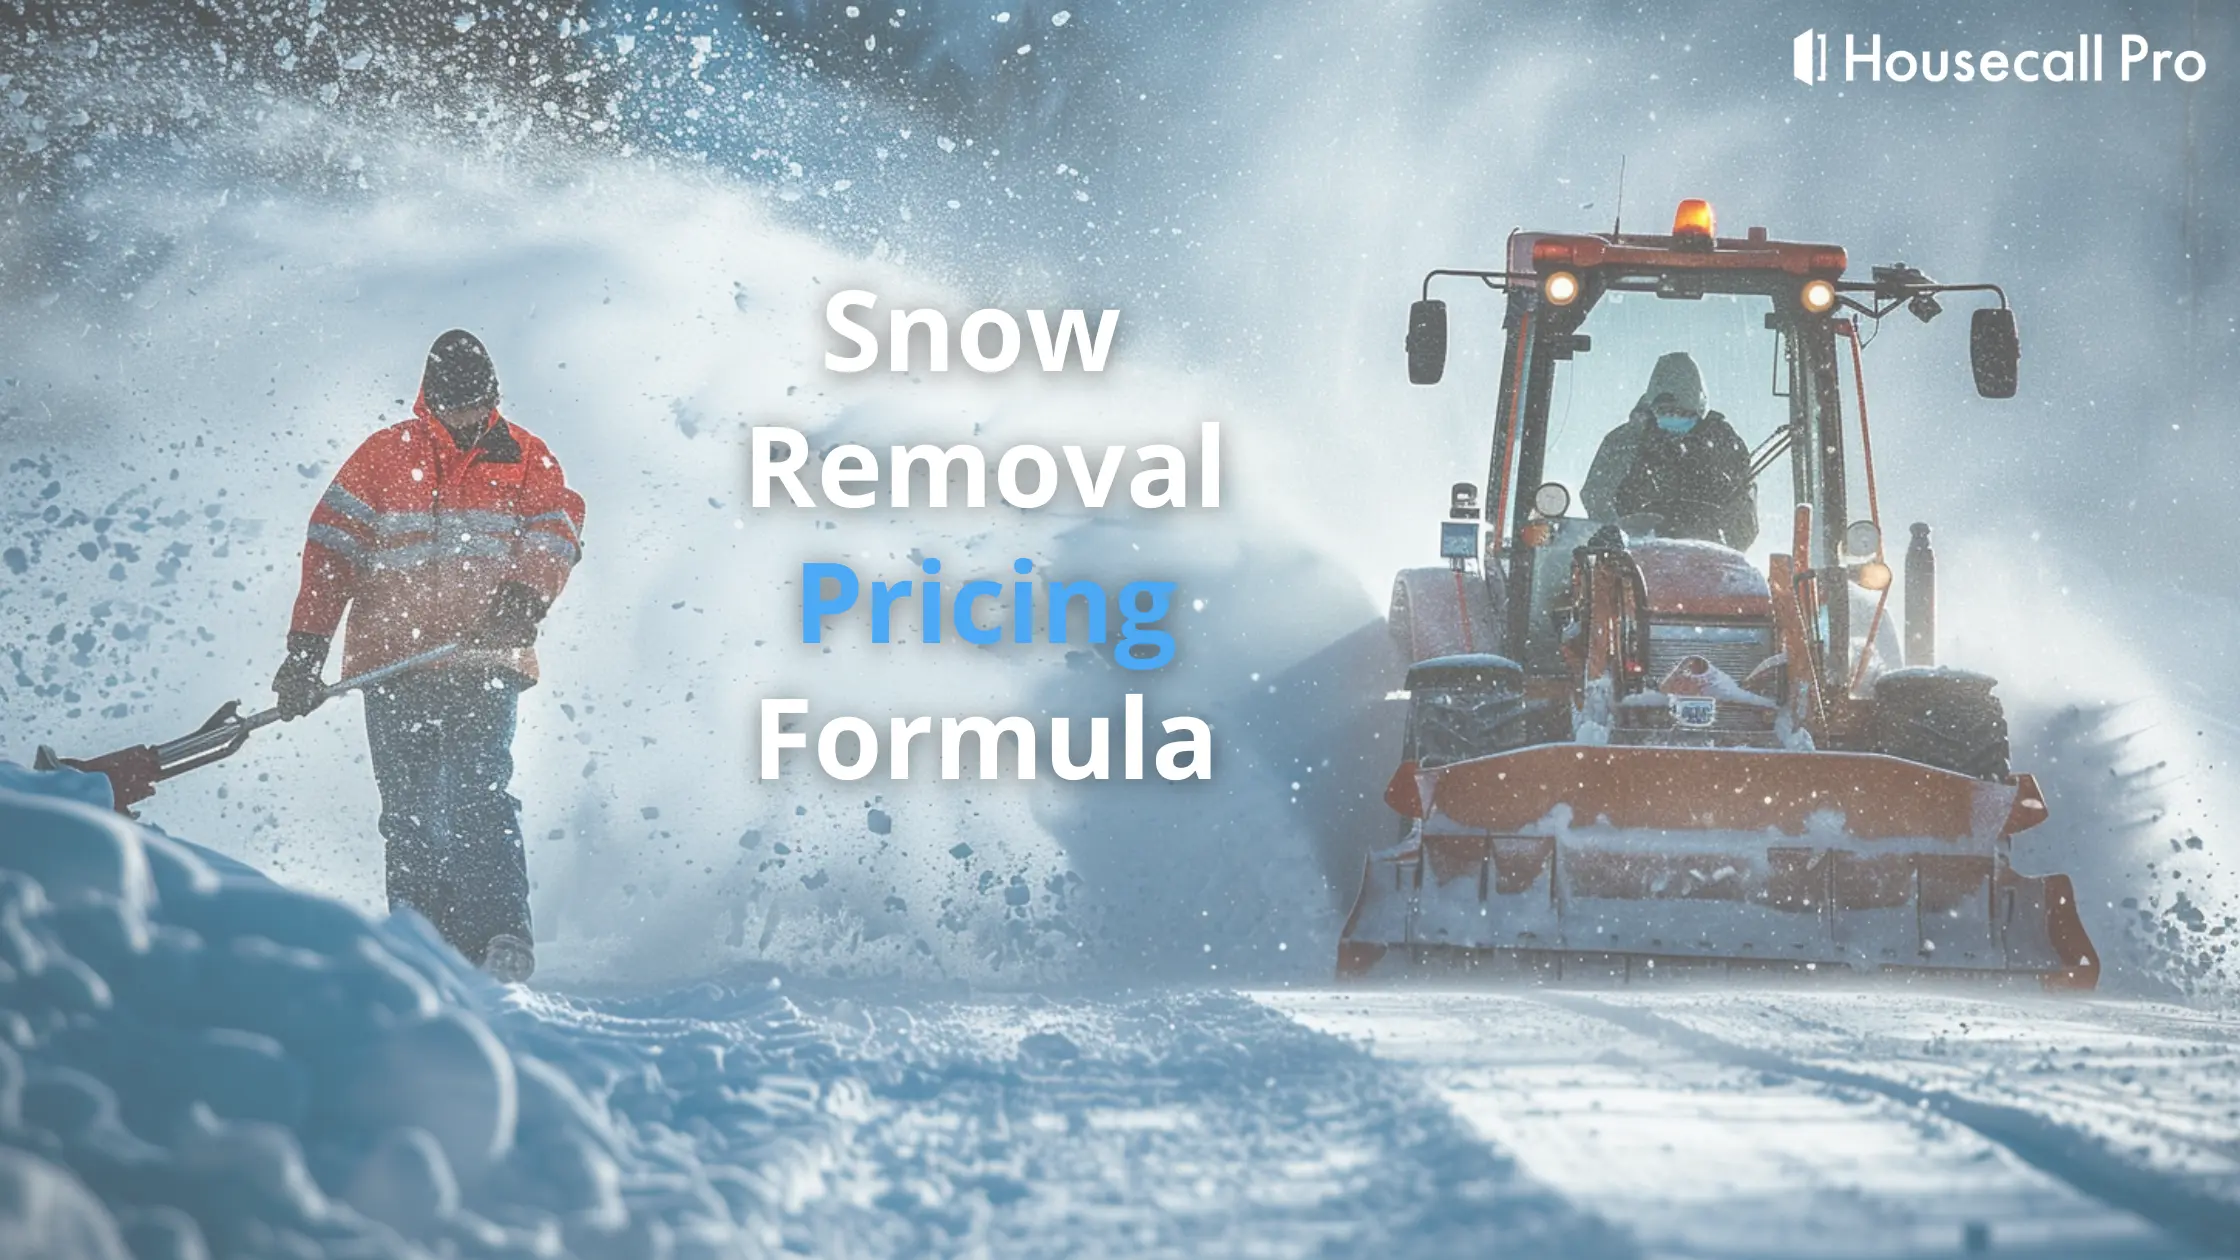 Snow Removal Pricing Formula